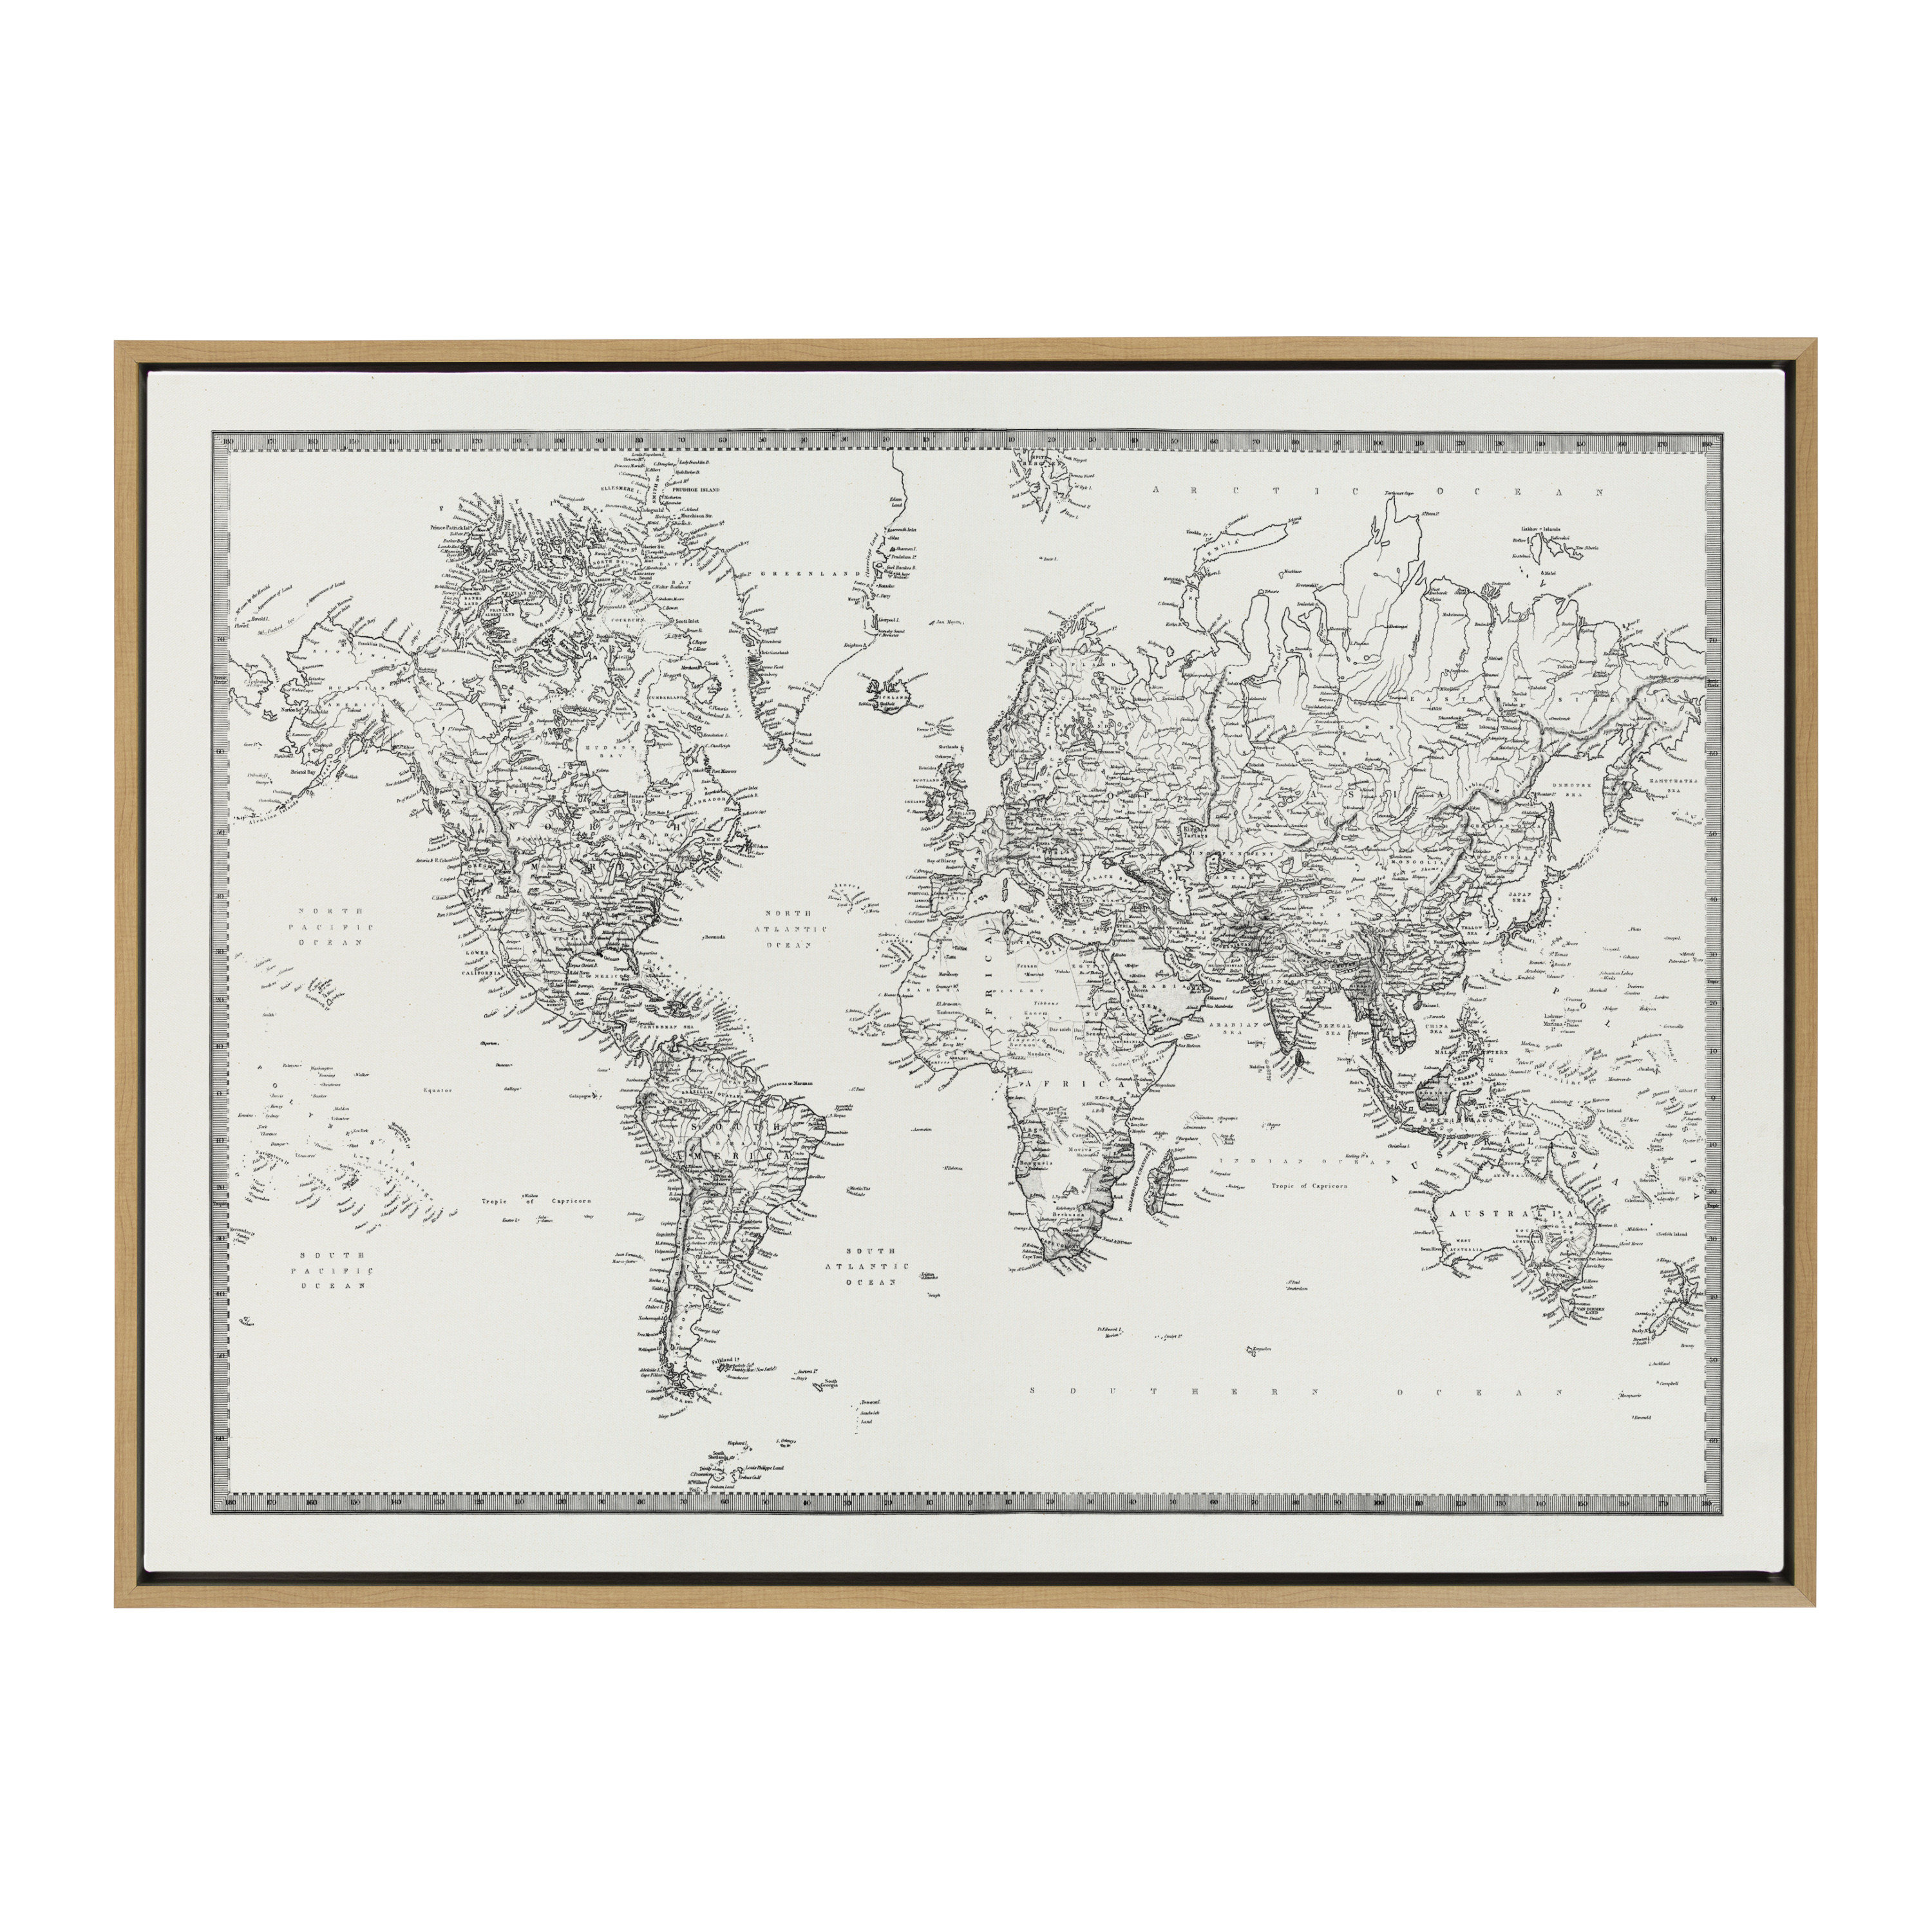 Bianco Wood World Map Art: Canvas Prints, Frames & Posters